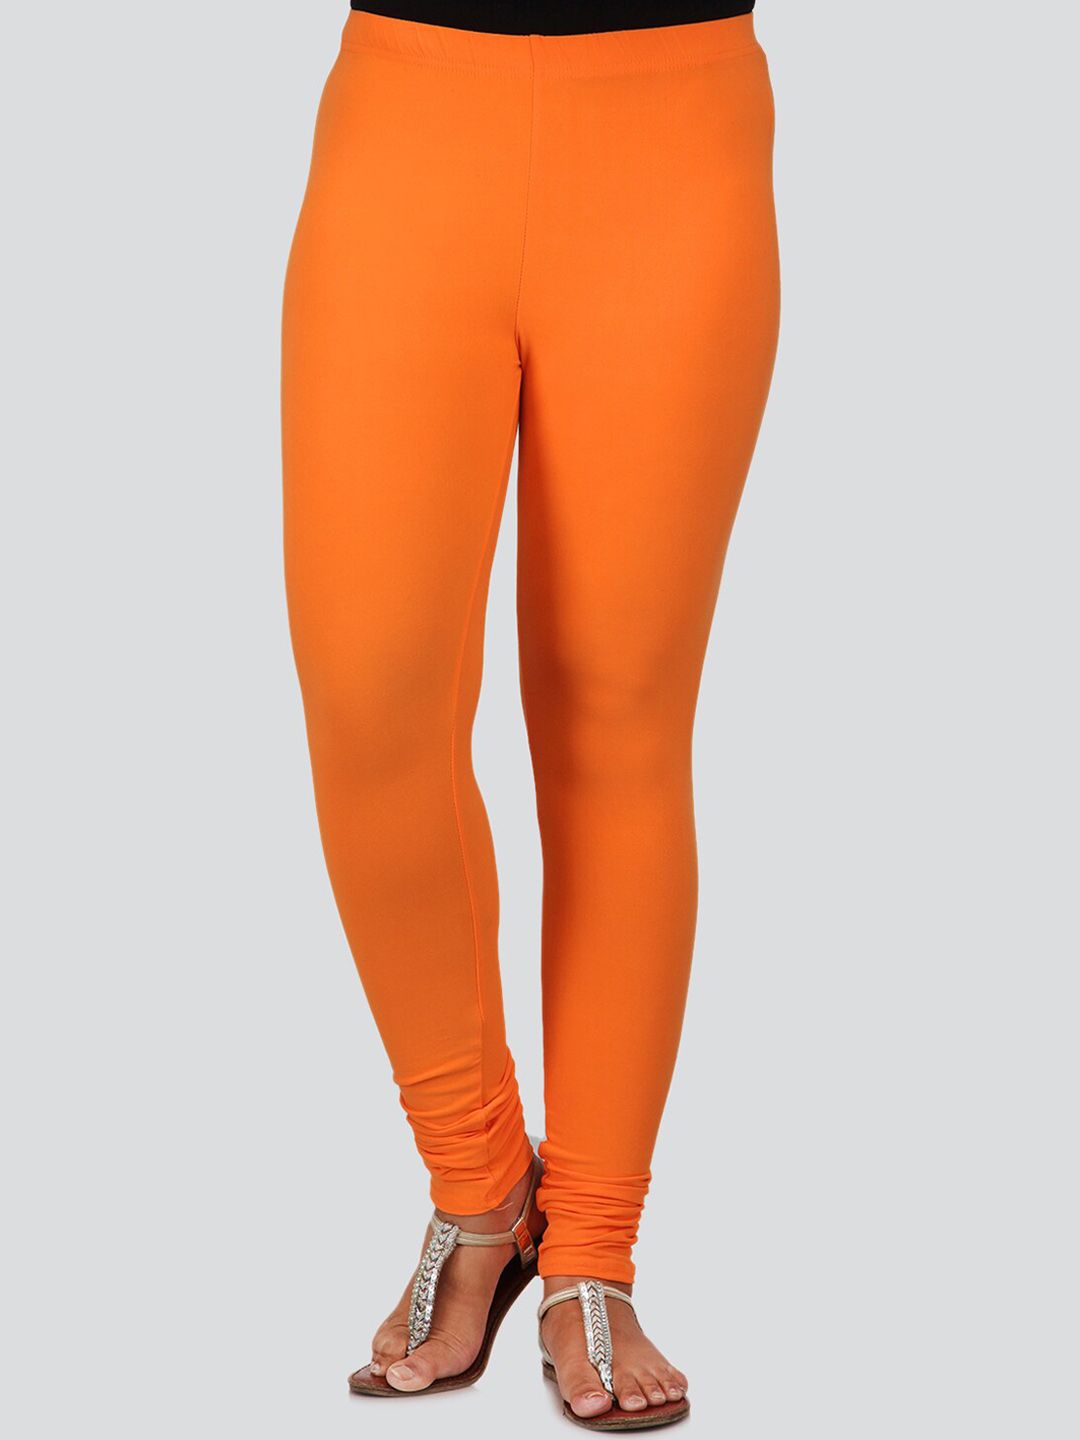 PinkLoom Women Orange Solid Churidar-Length Leggings Price in India